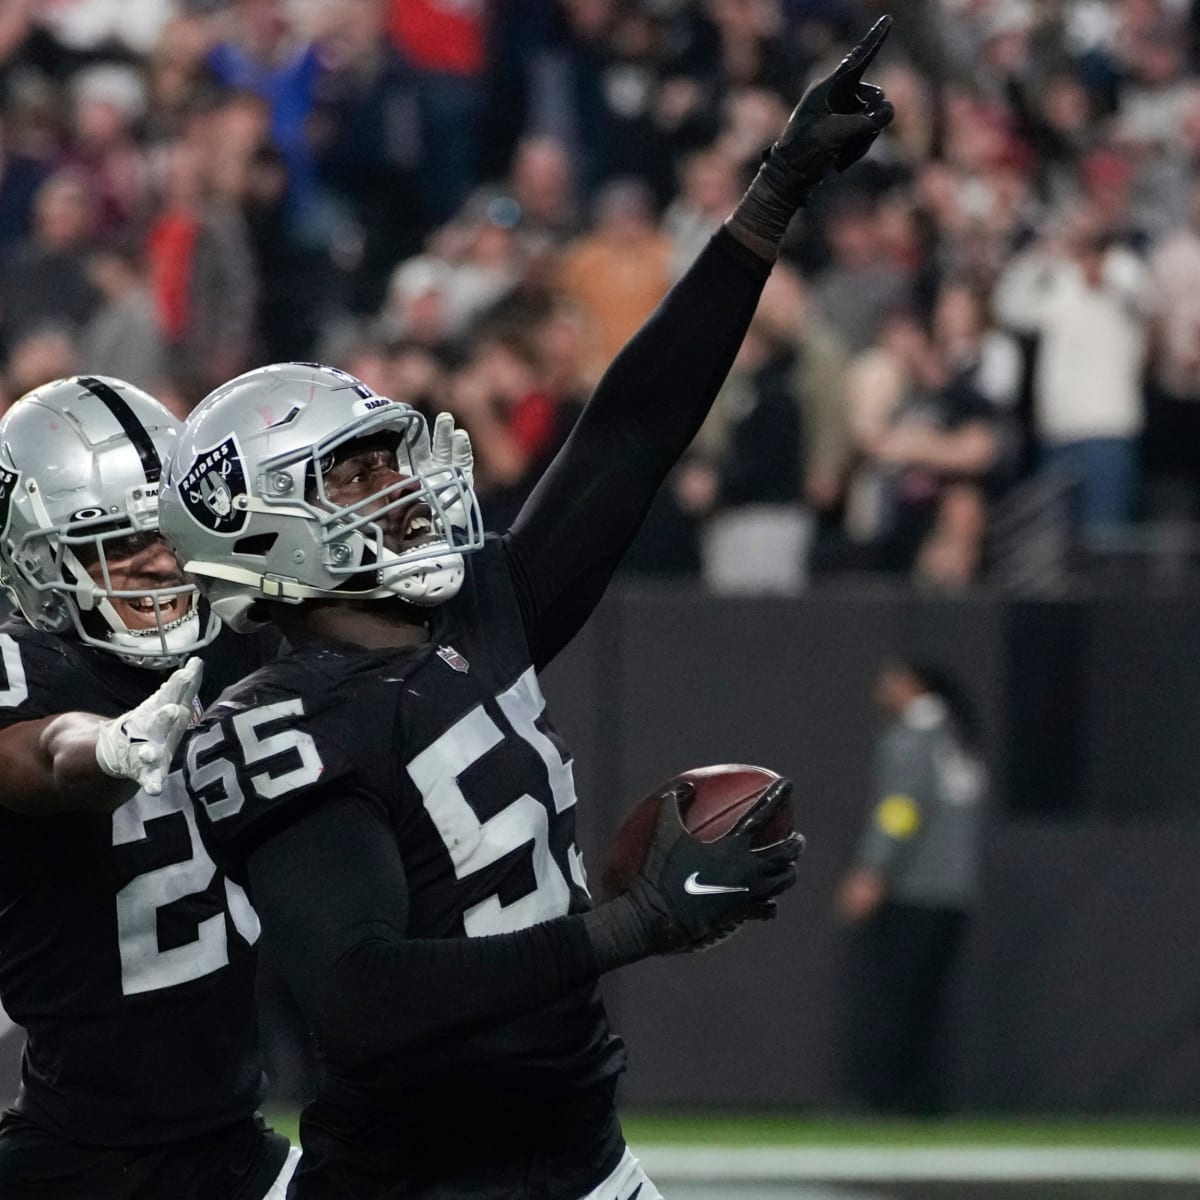 Raiders stun Patriots with improbable walk-off defensive touchdown